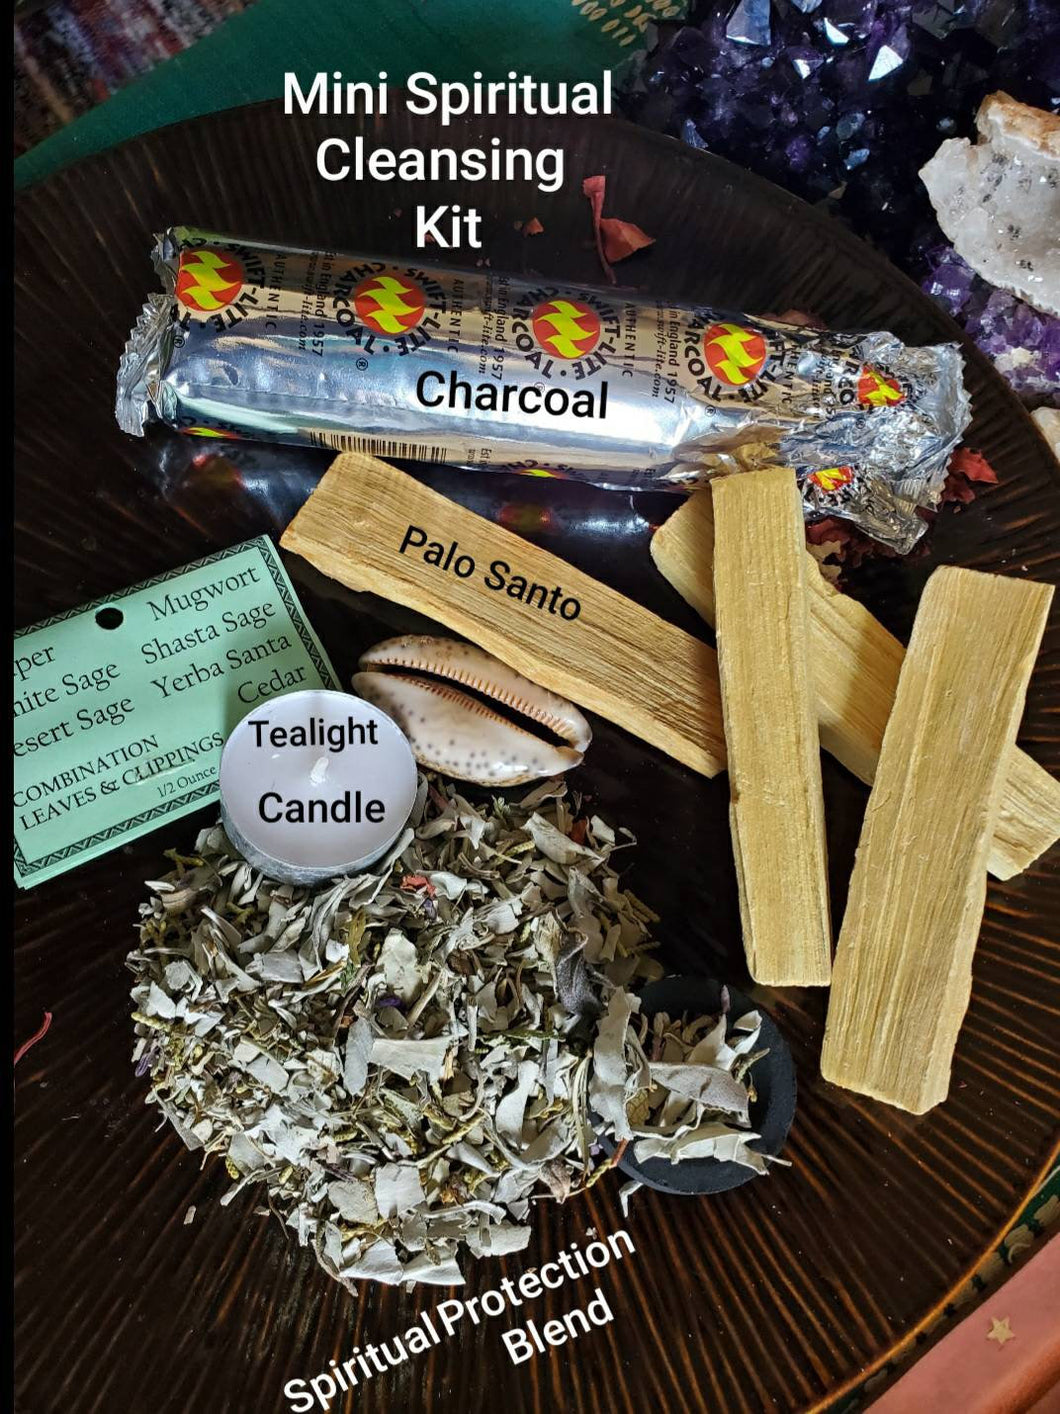 Mini Spiritual Cleansing Kit (1 Palo Santo. 1 Spiritual Protection Blend. 1 Tea-light Candle. 1 Charcoal.)